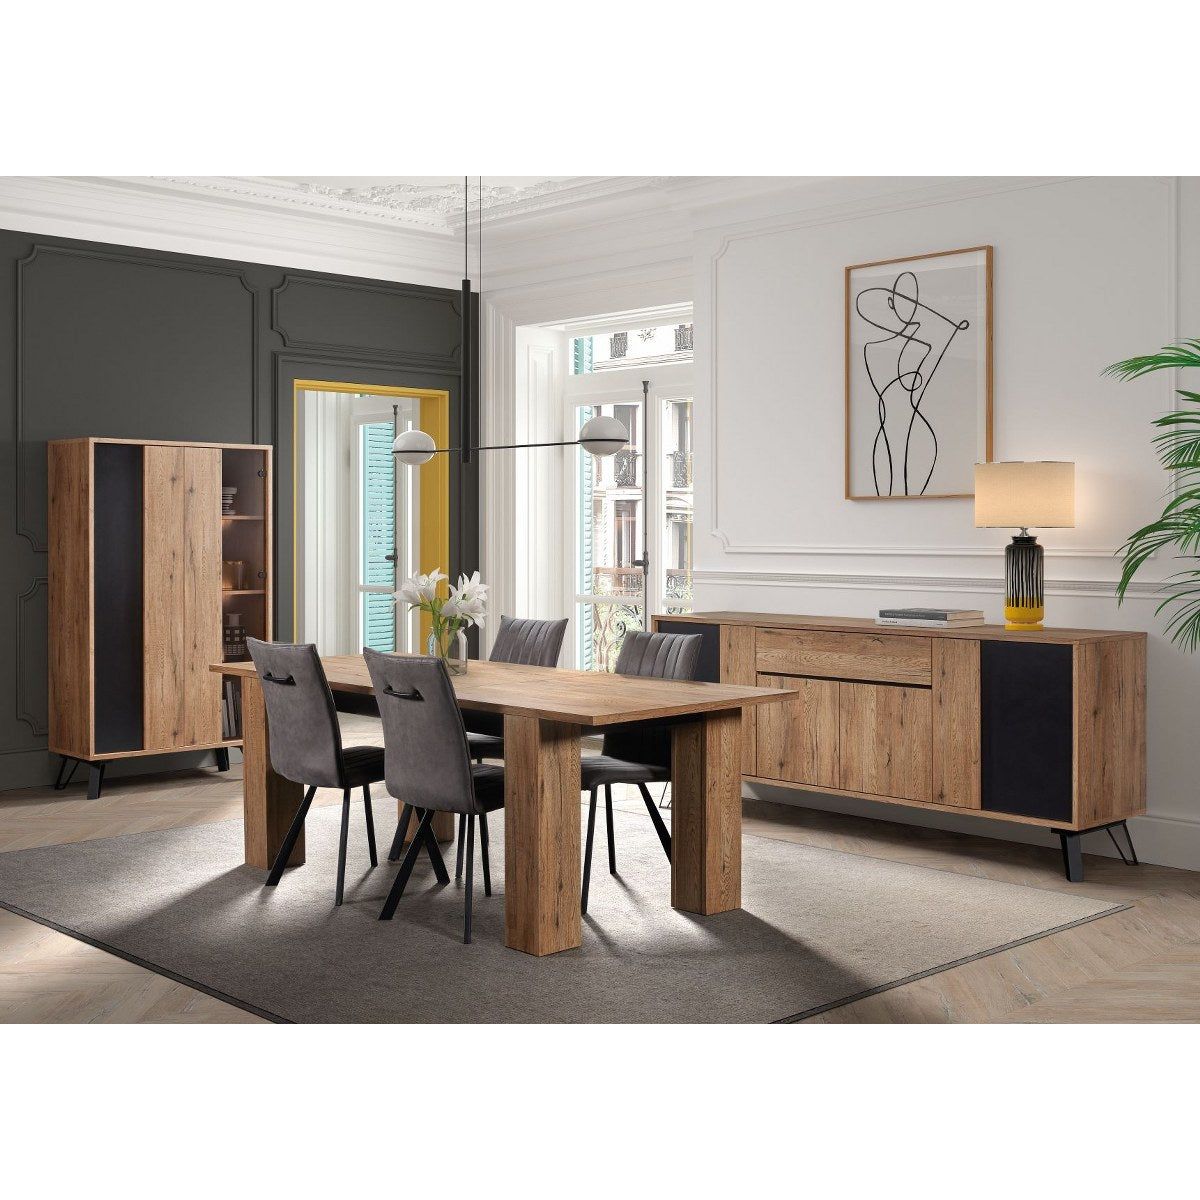 Wall cabinet / display cabinet | Furniture series Manor | brown, natural,